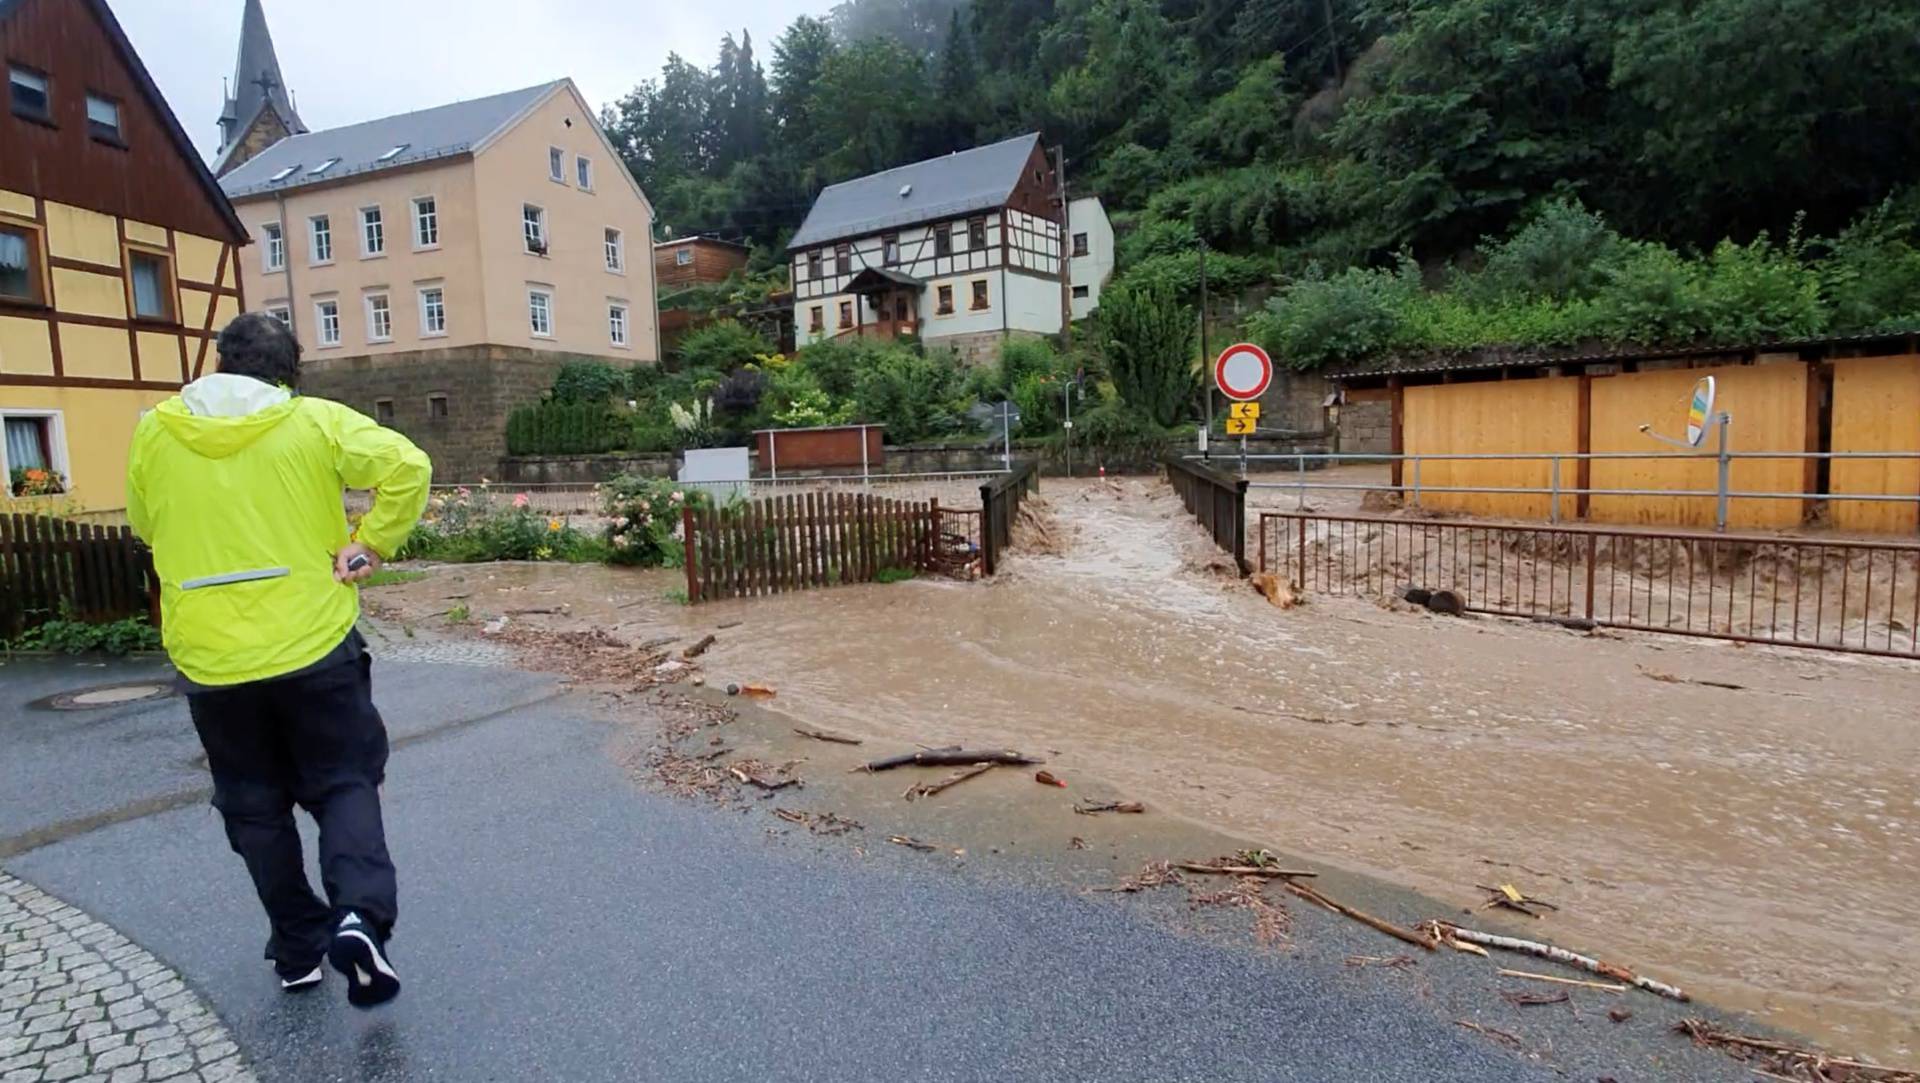 Flooding in Saxony